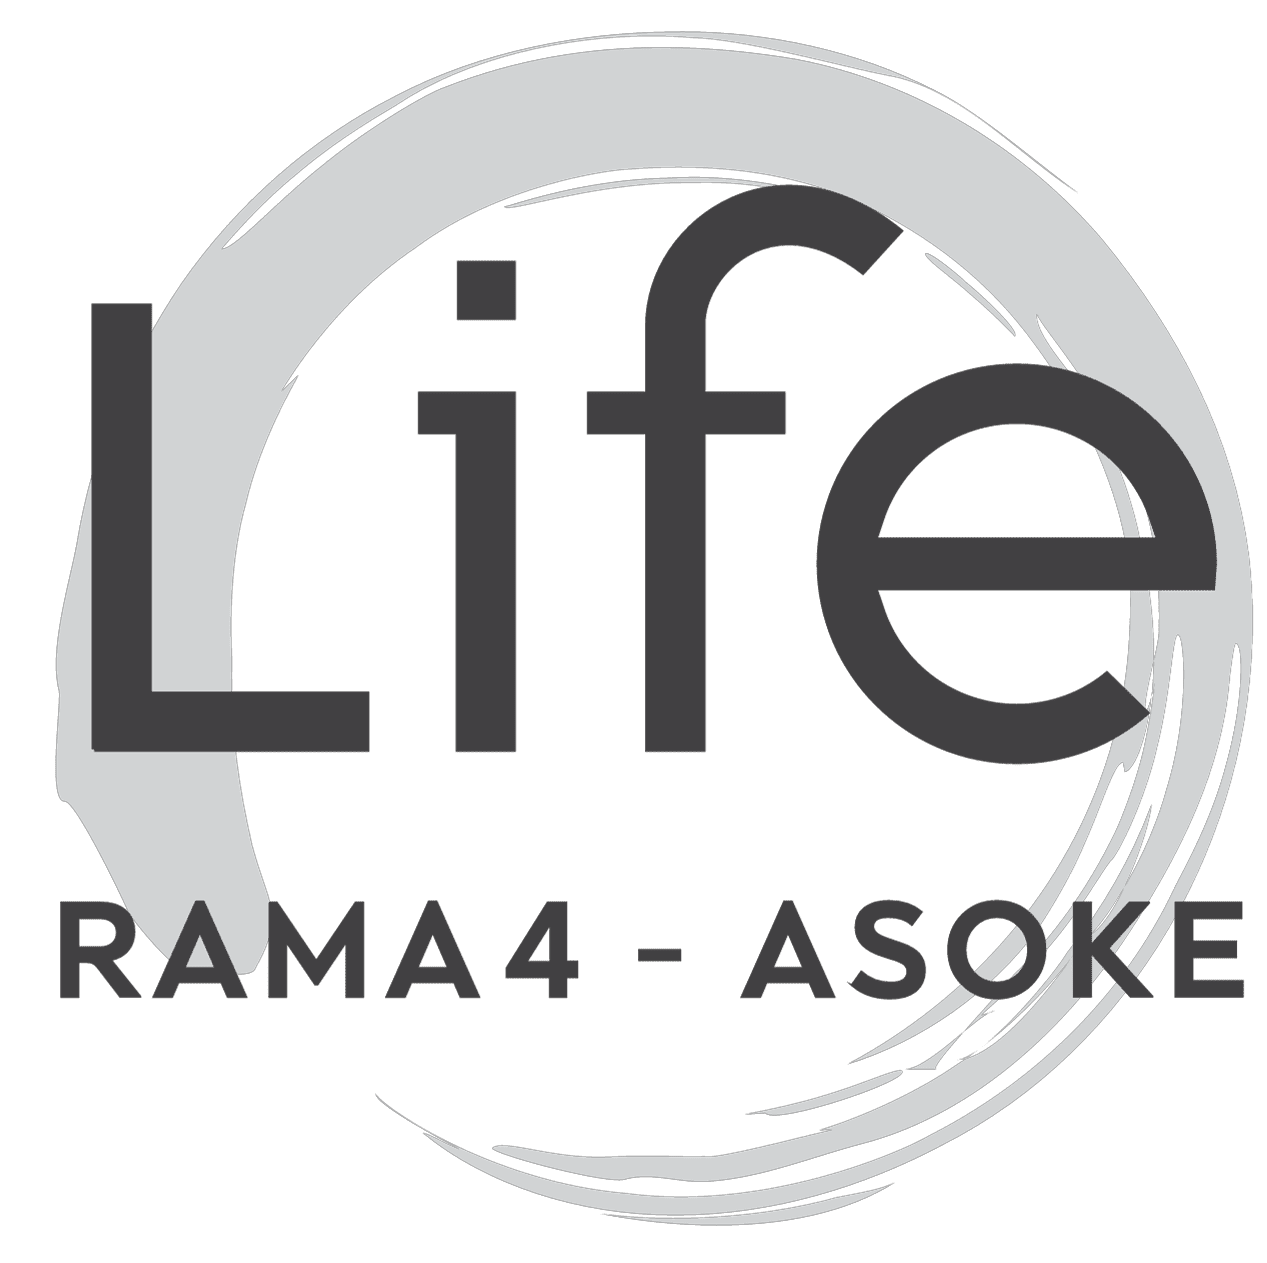 Life Rama4 Asoke logo cre.ai